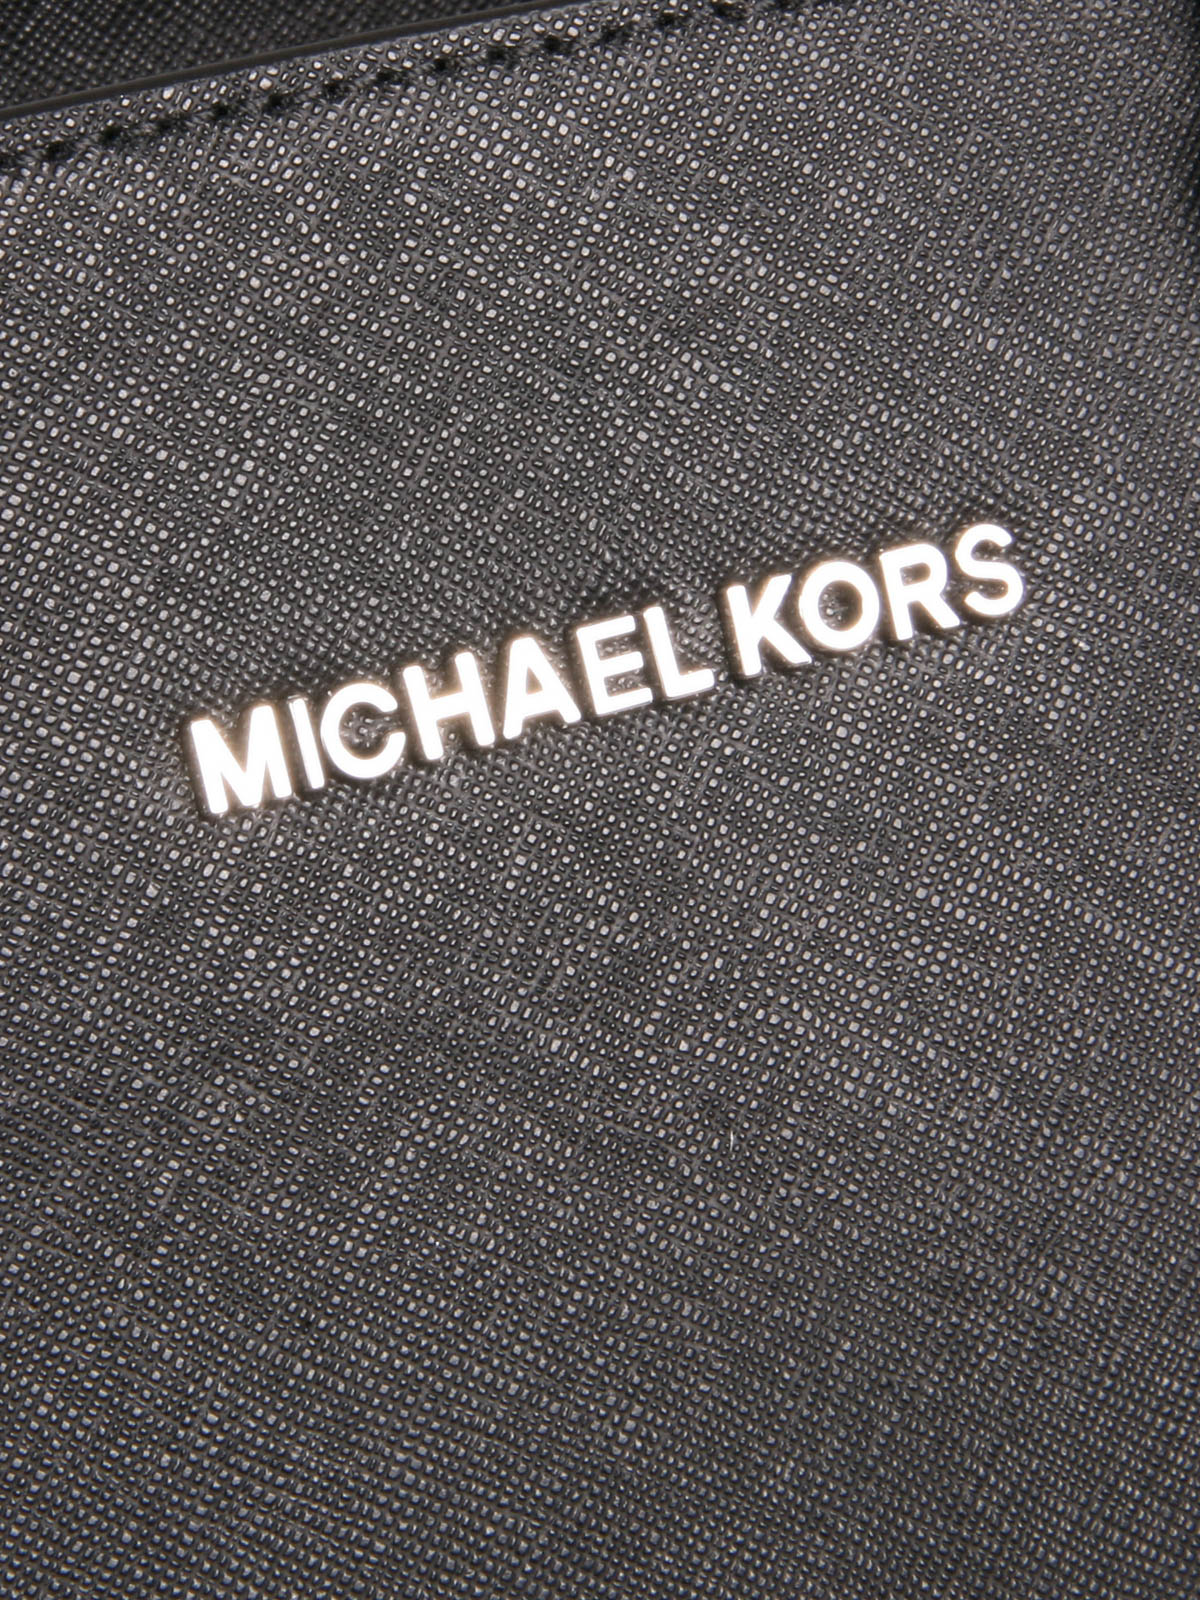 Michael Michael Kors Selma Medium Top Zip Patent Leather Satchel